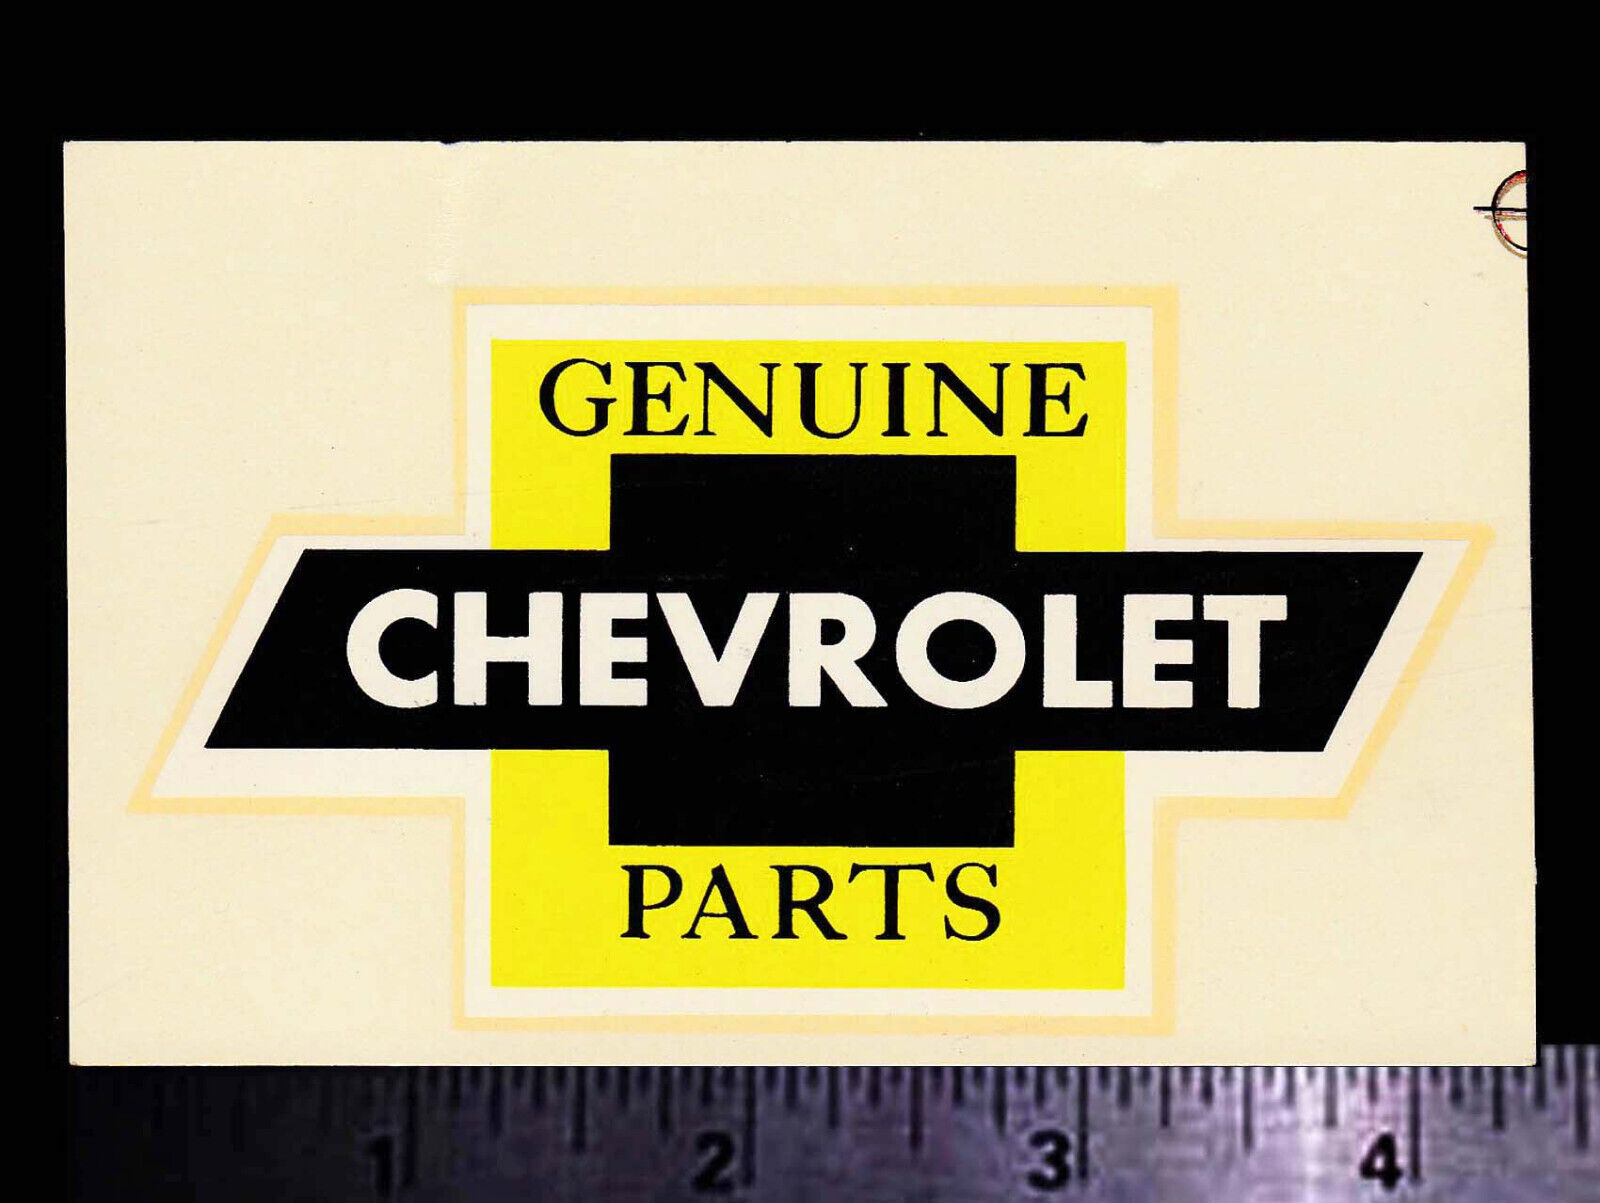 CHEVROLET Genuine Parts - Original Vintage 60’s Racing Water Slide Decal 4 inch